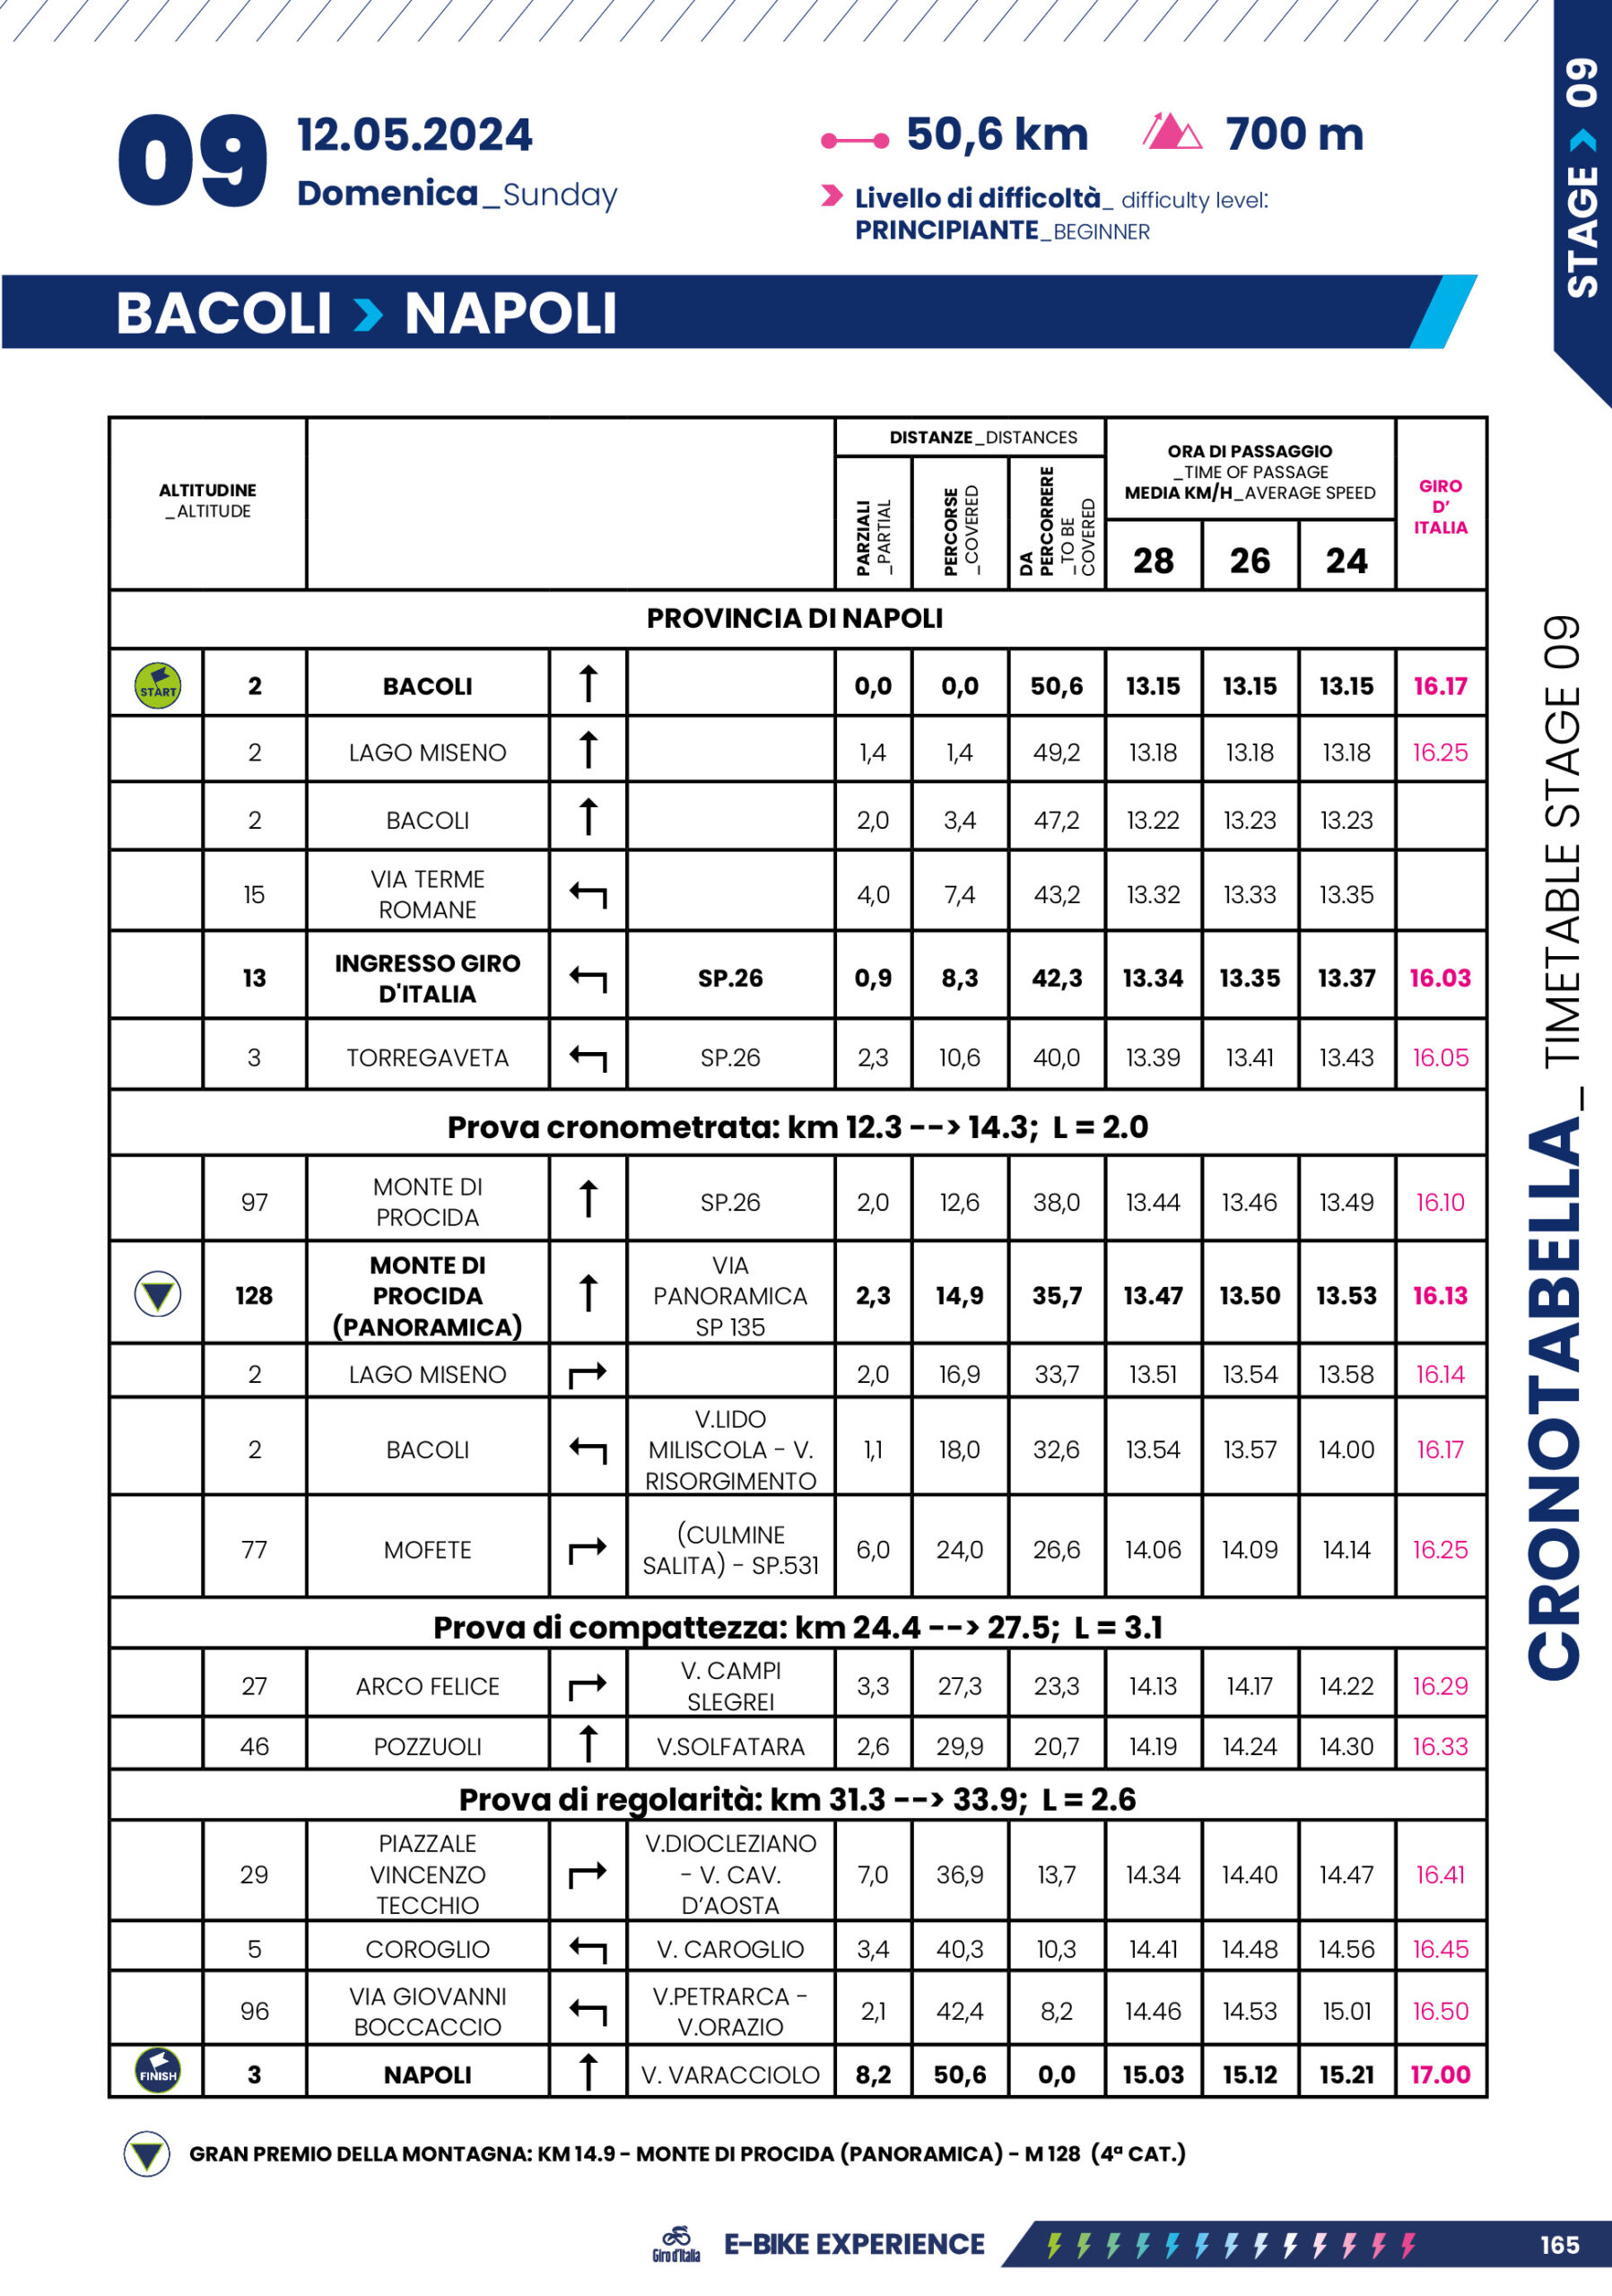 Cronotabella/Itinerary Timetable Tappa 9 Giro-E 2024